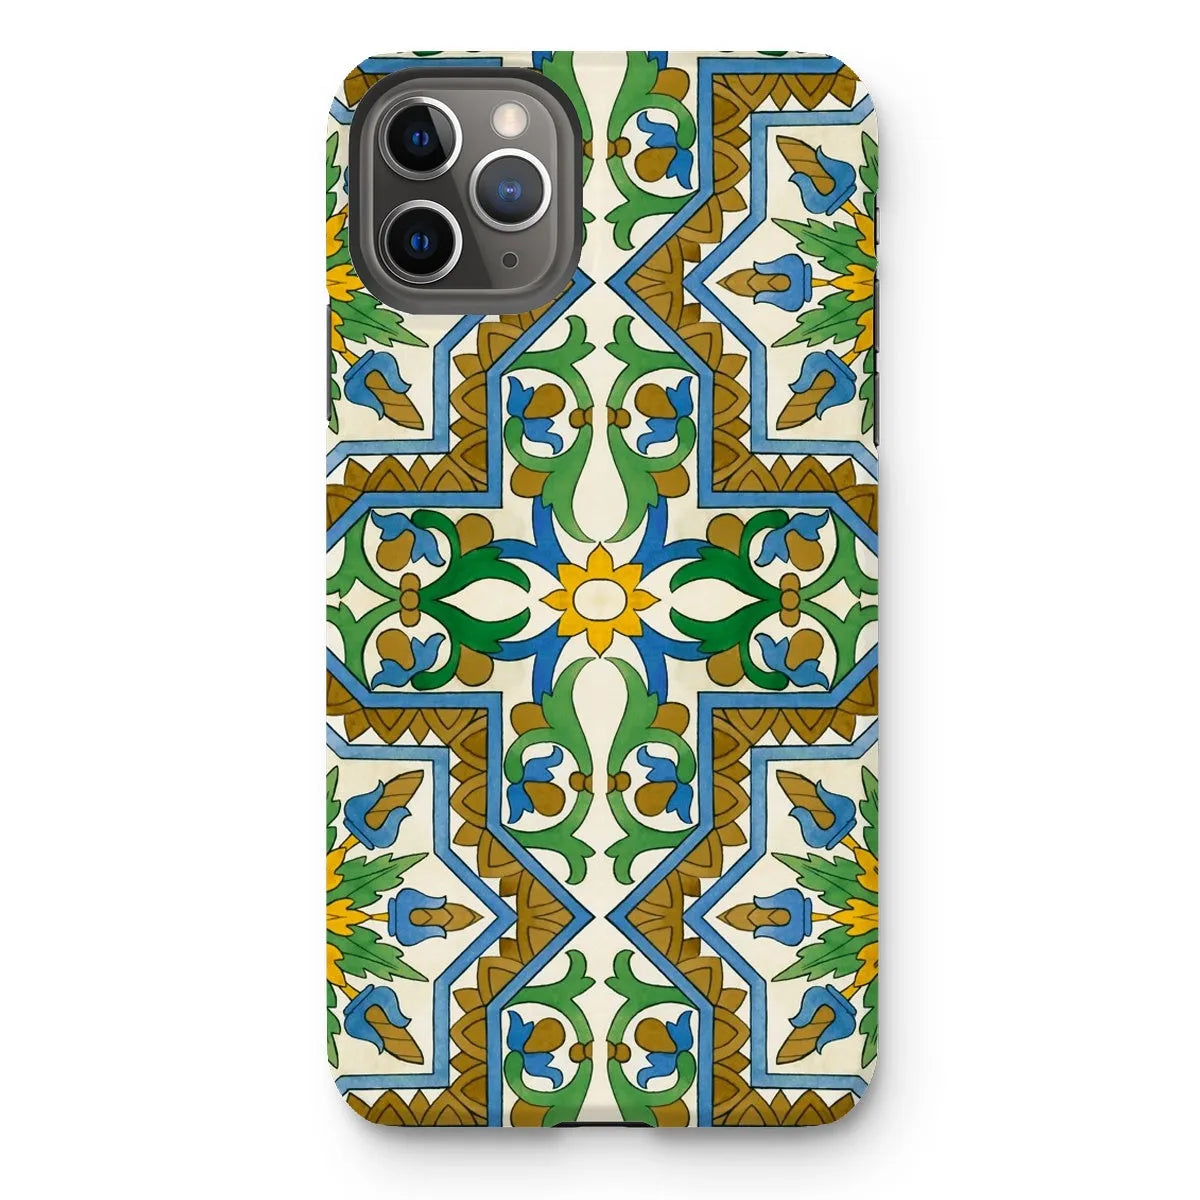 Moreish Moorish - Spanish Aesthetic Pattern Phone Case - Iphone 11 Pro Max / Matte - Mobile Phone Cases - Aesthetic Art